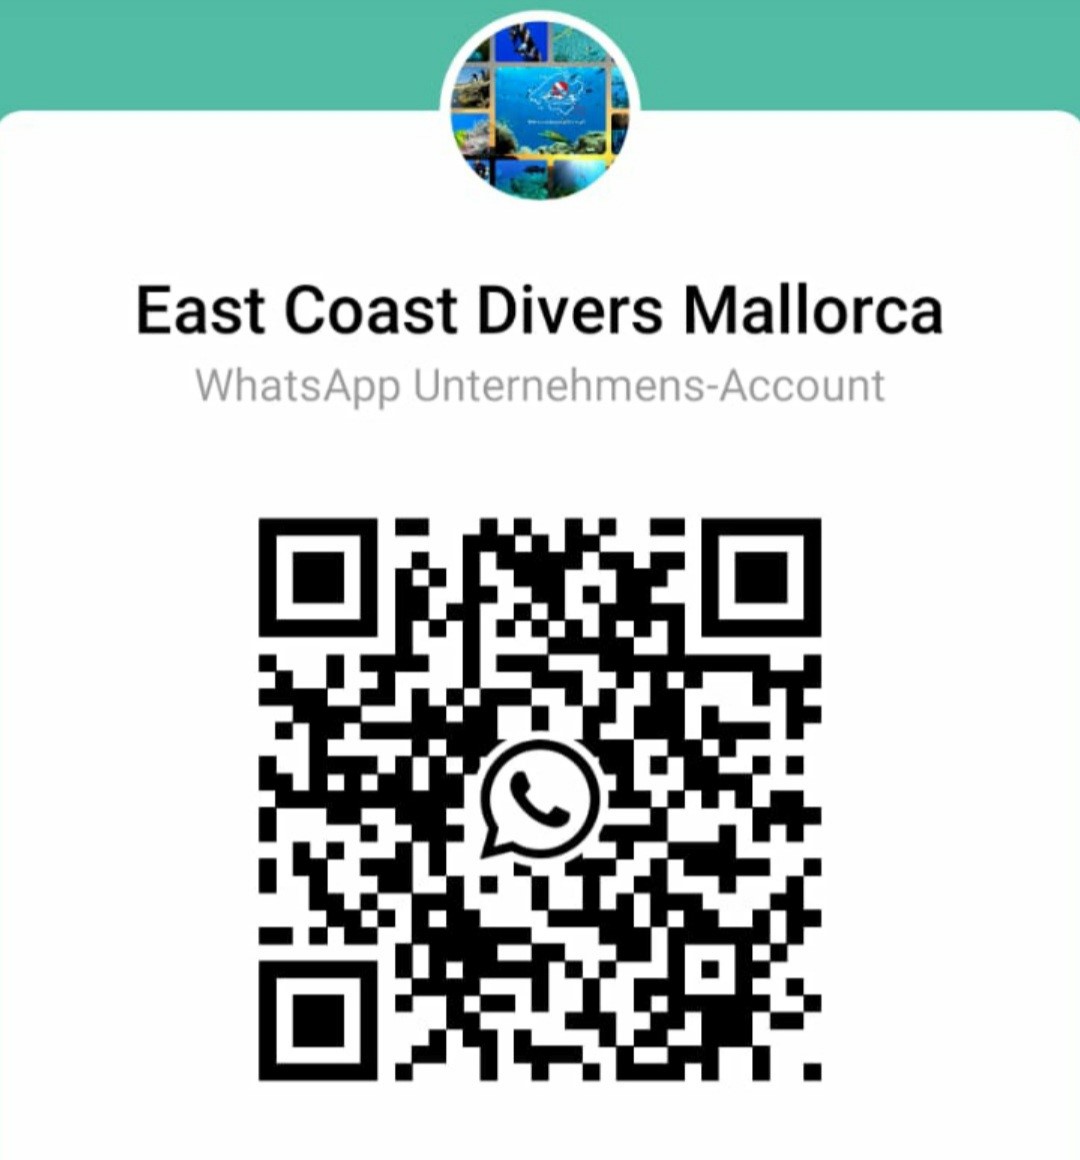 East Coast Divers Mallorca WhatsApp